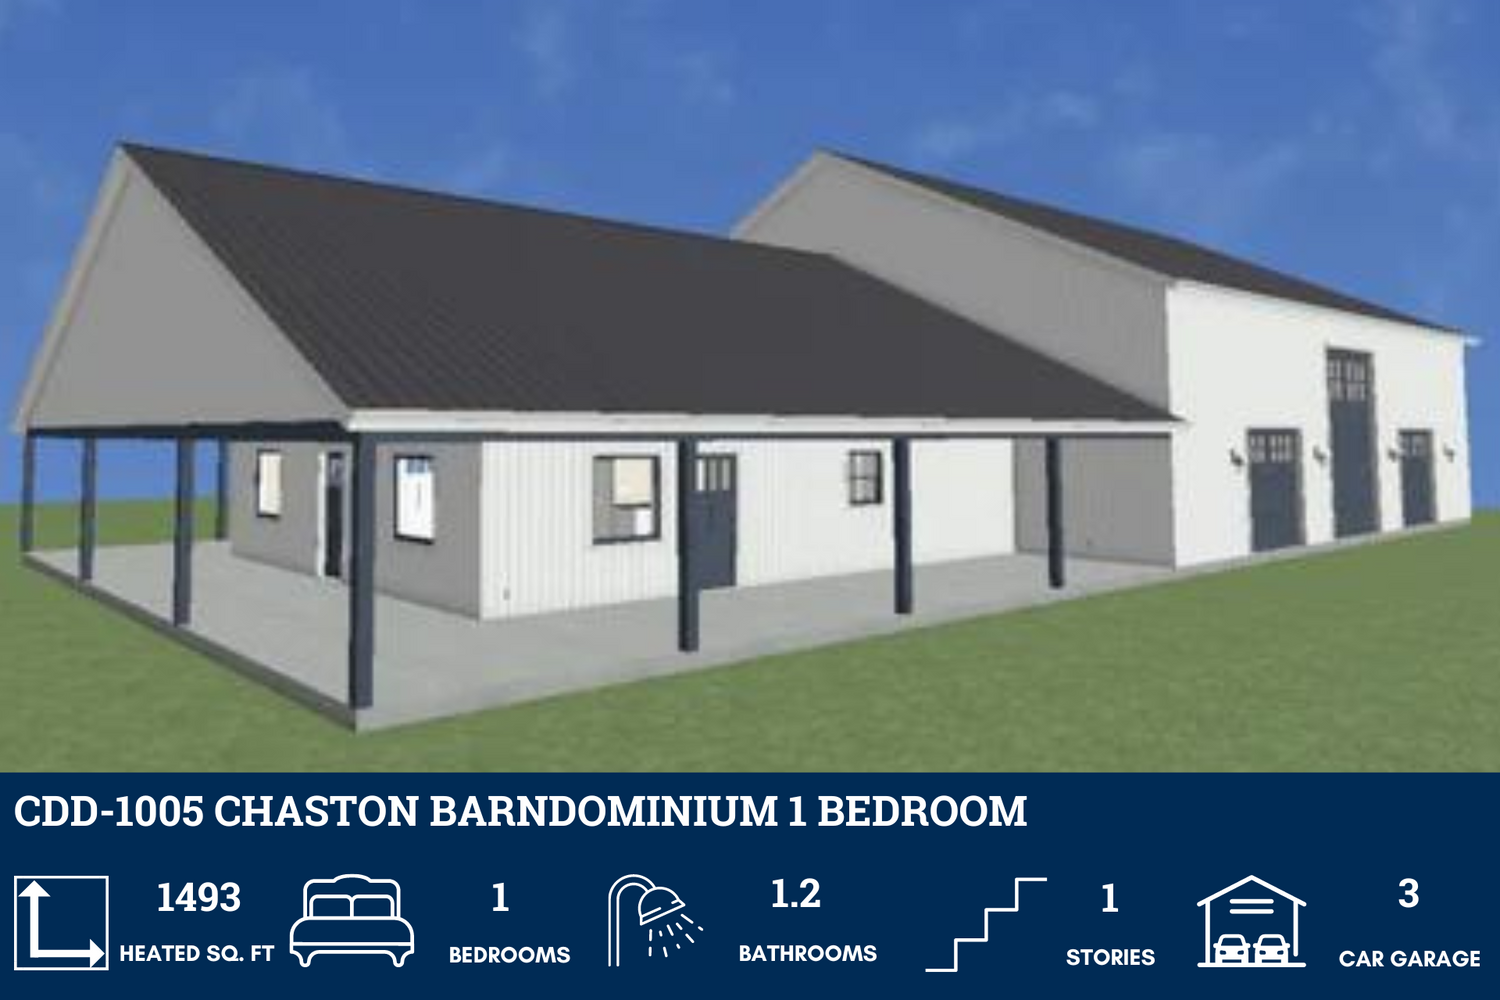 1 Bedroom Barndominium House Plans